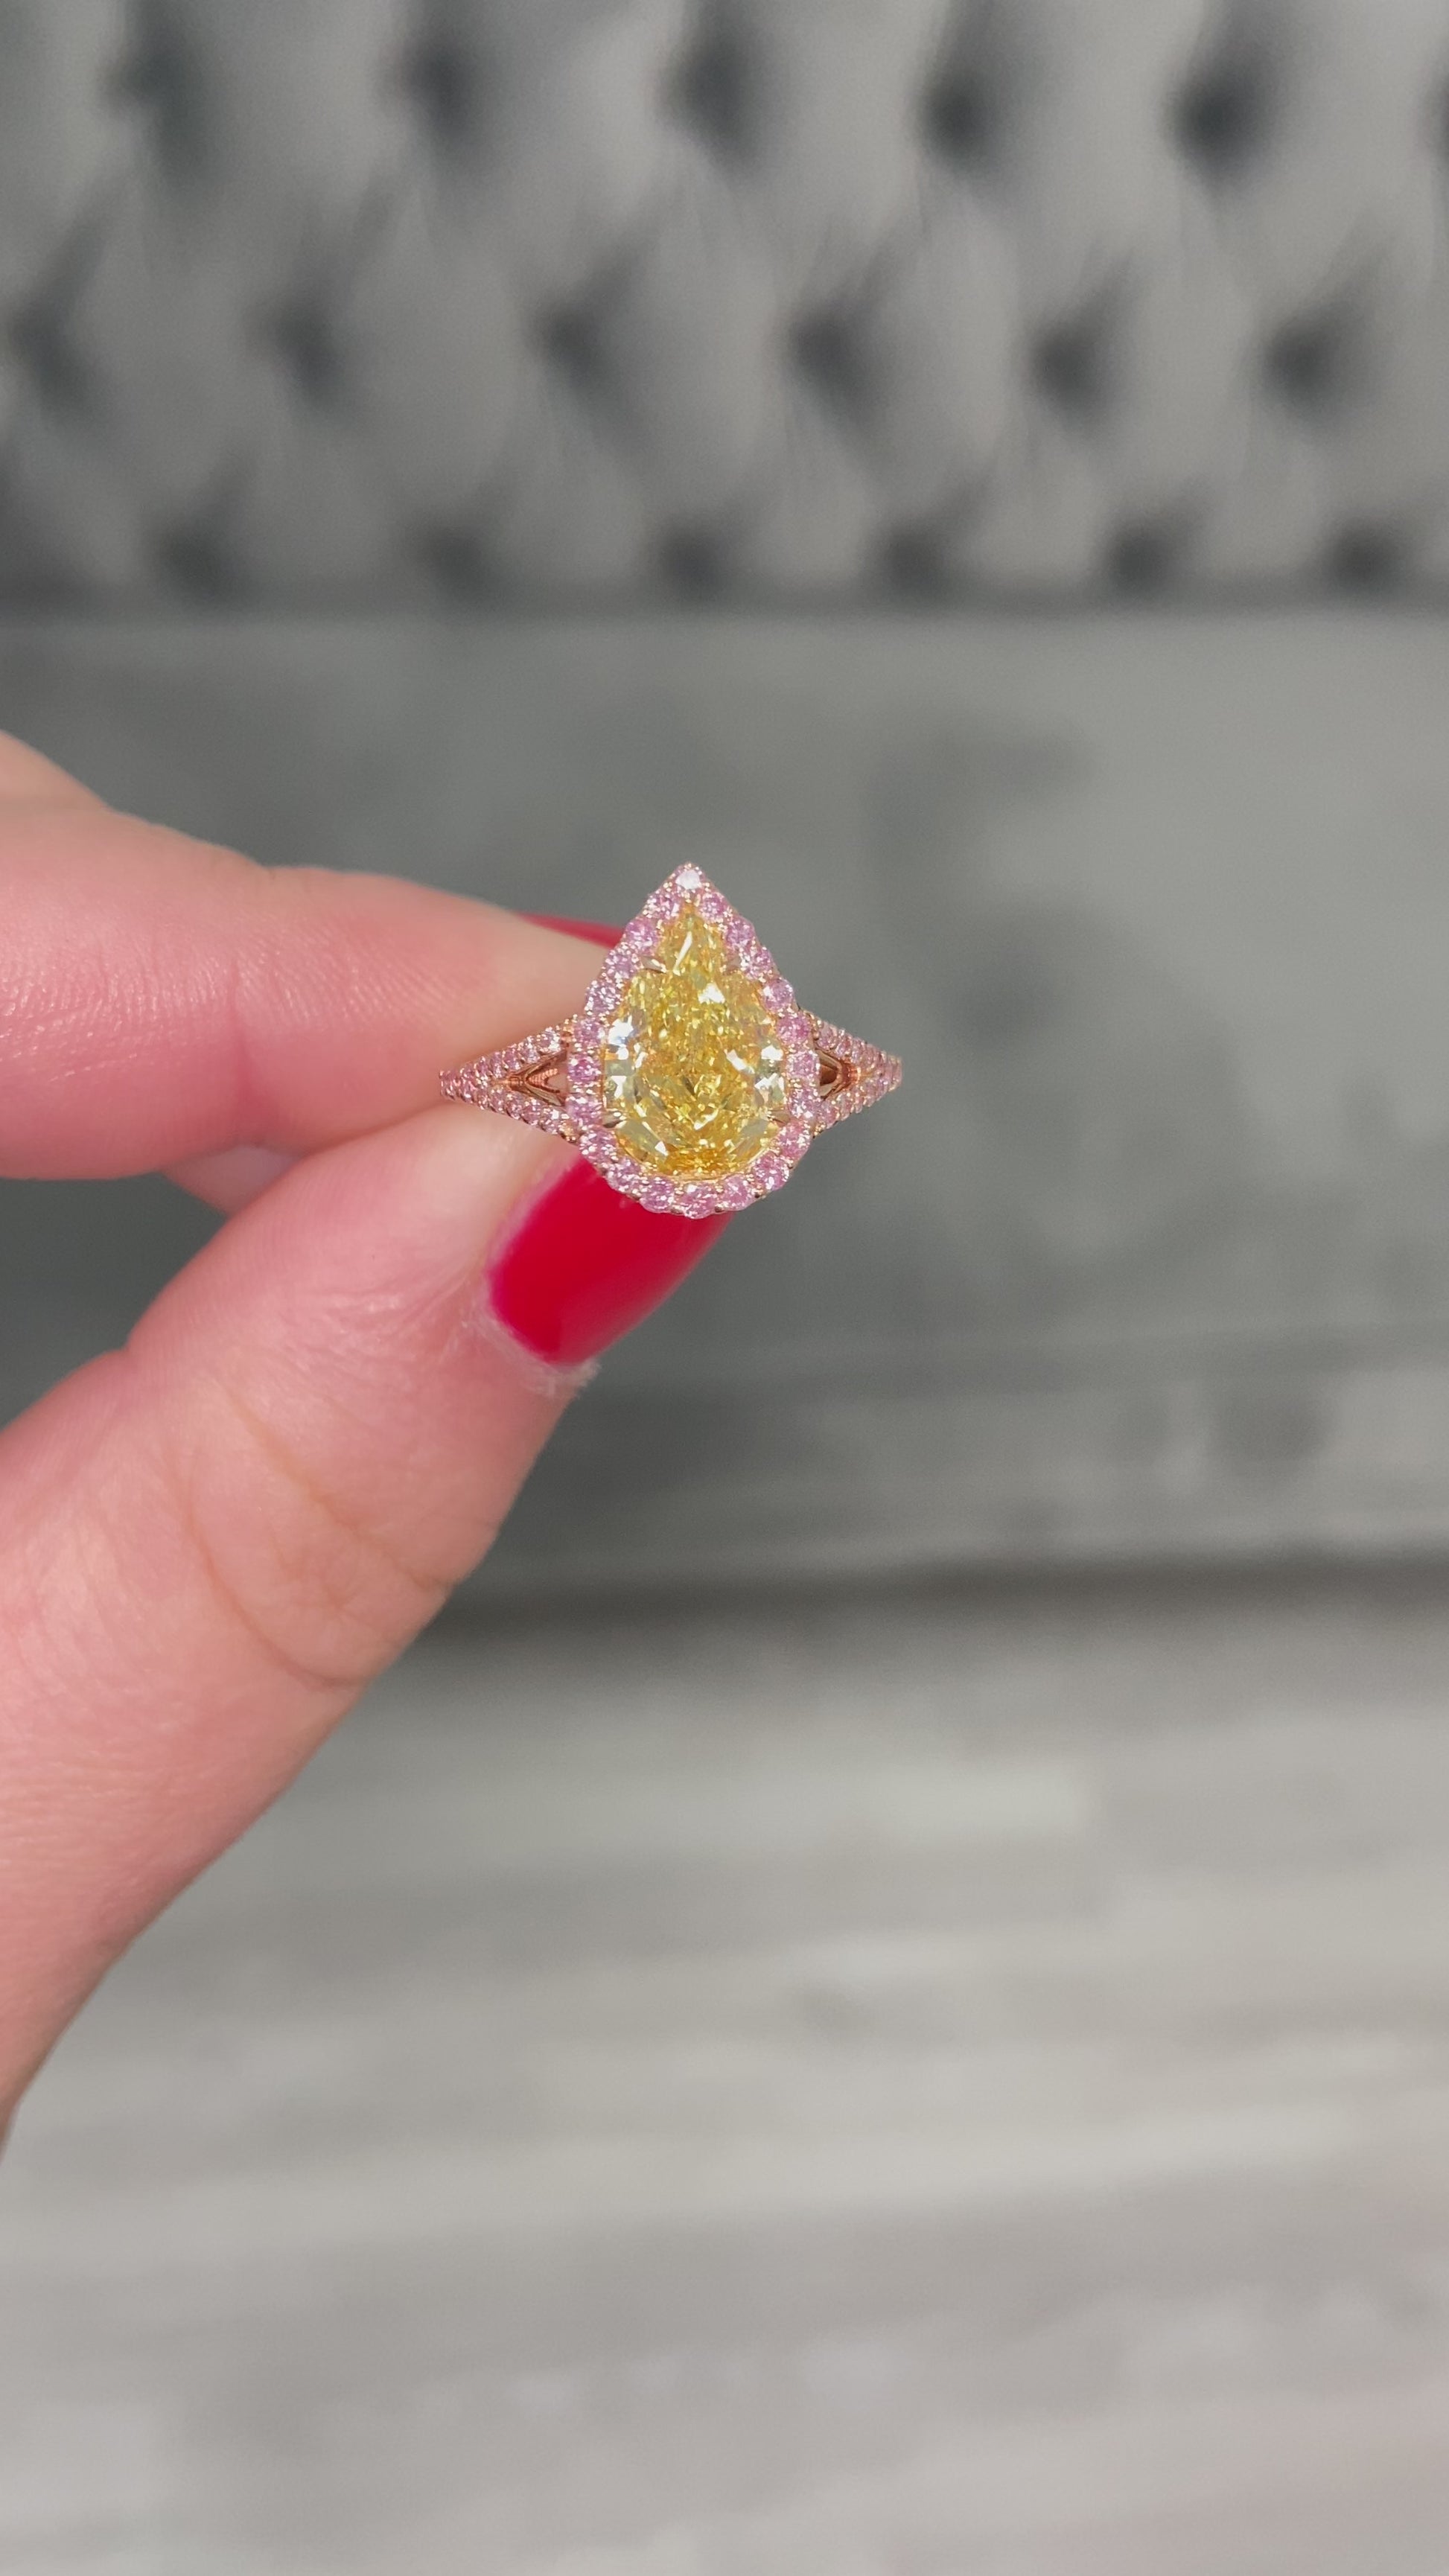 Gia certified yellow diamond. Yellow diamond engagement ring. Yellow diamond pear shape ring. Fancy pink diamonds. Simple halo diamond ring.